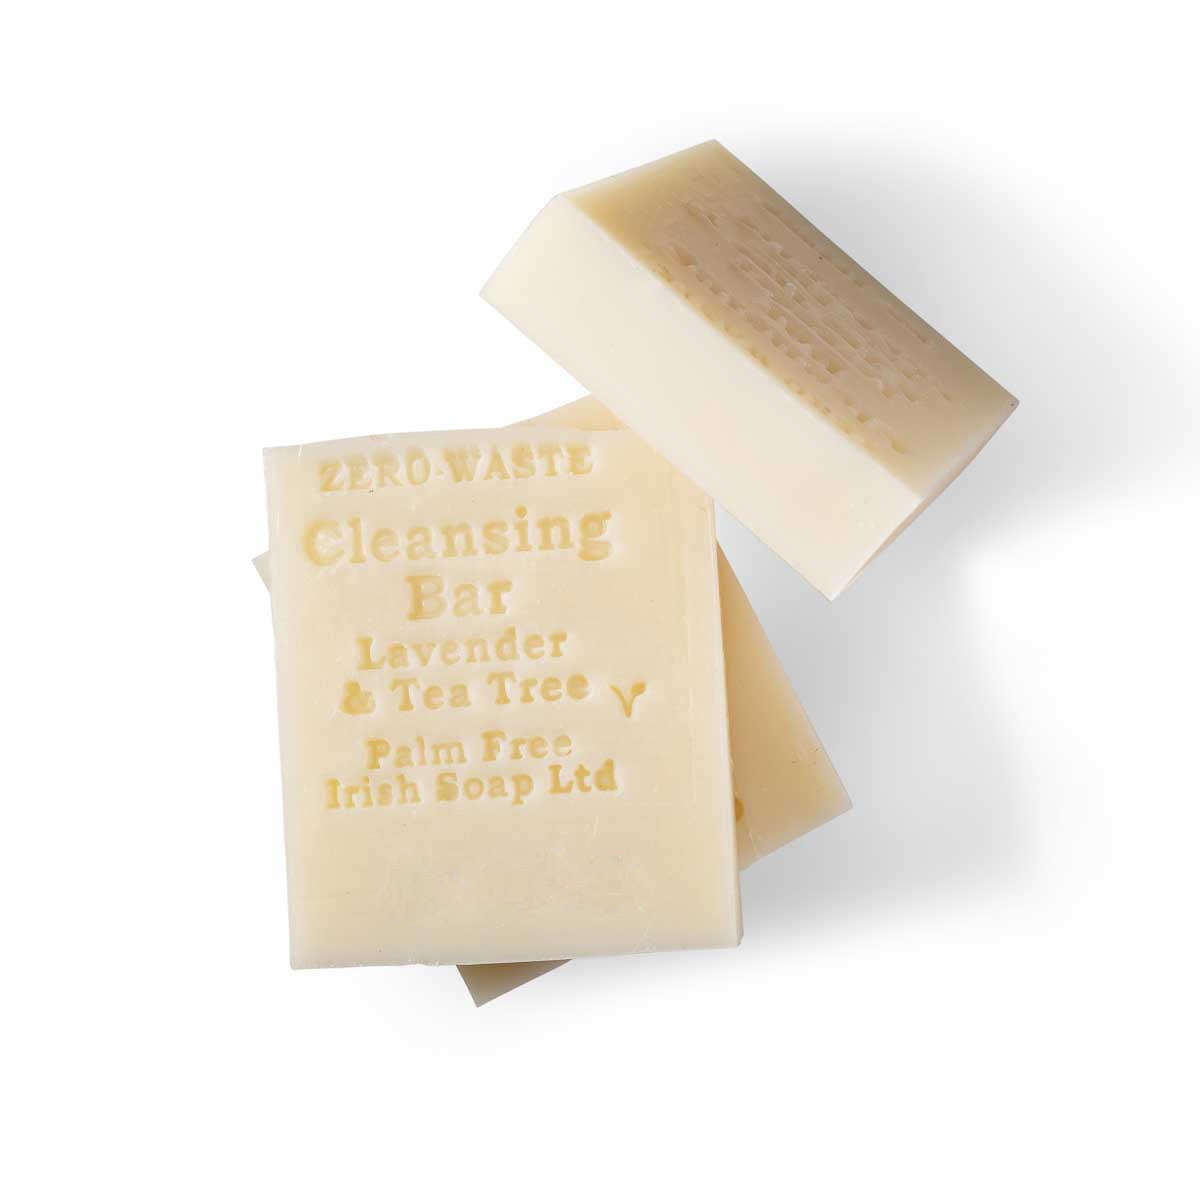 Palm Free Irish Soap, Anti - Microbial Cleansing Bar